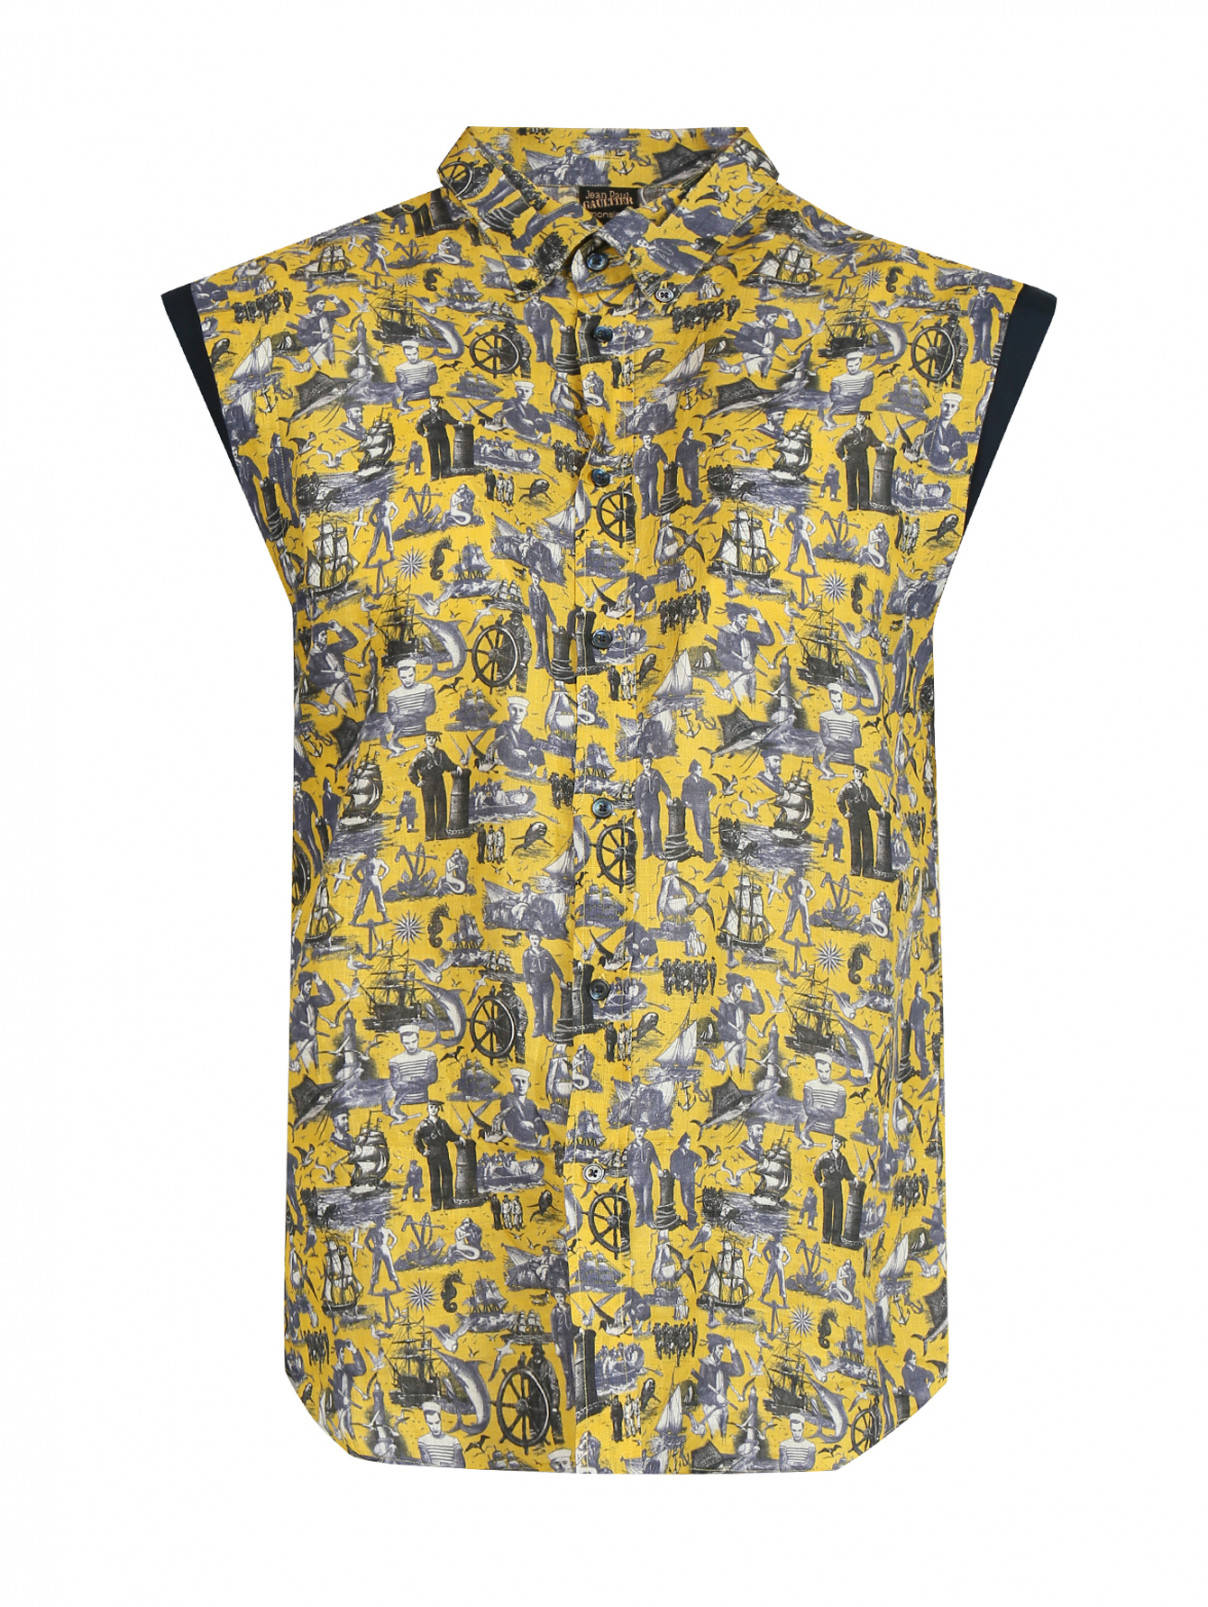 Рубашка без рукавов с узором Jean Paul Gaultier  –  Общий вид  – Цвет:  Узор